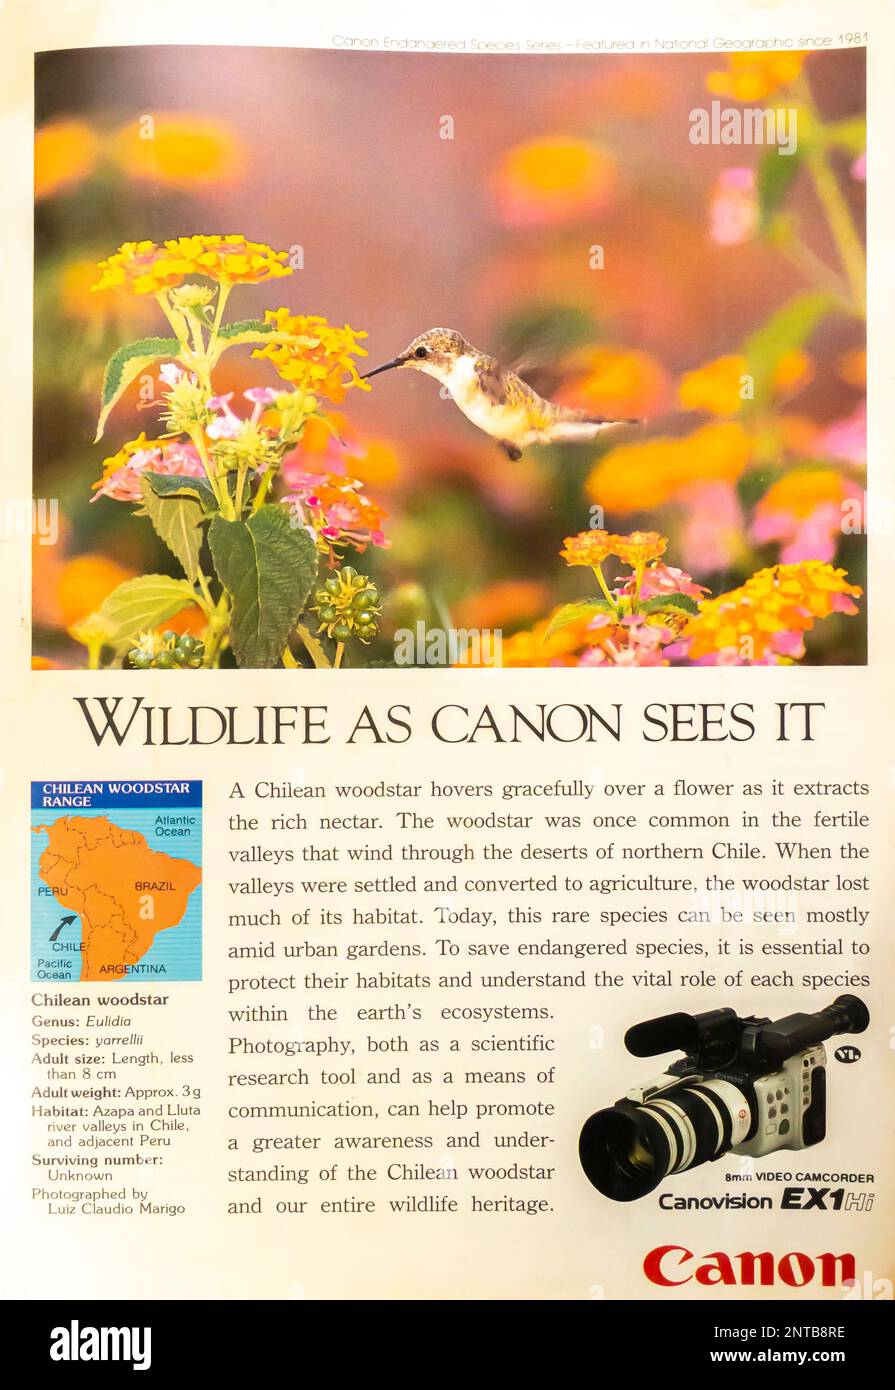 Canon EX1 8 mm videocamera advert in a NatGeo magazine, December 1992 Stock Photo